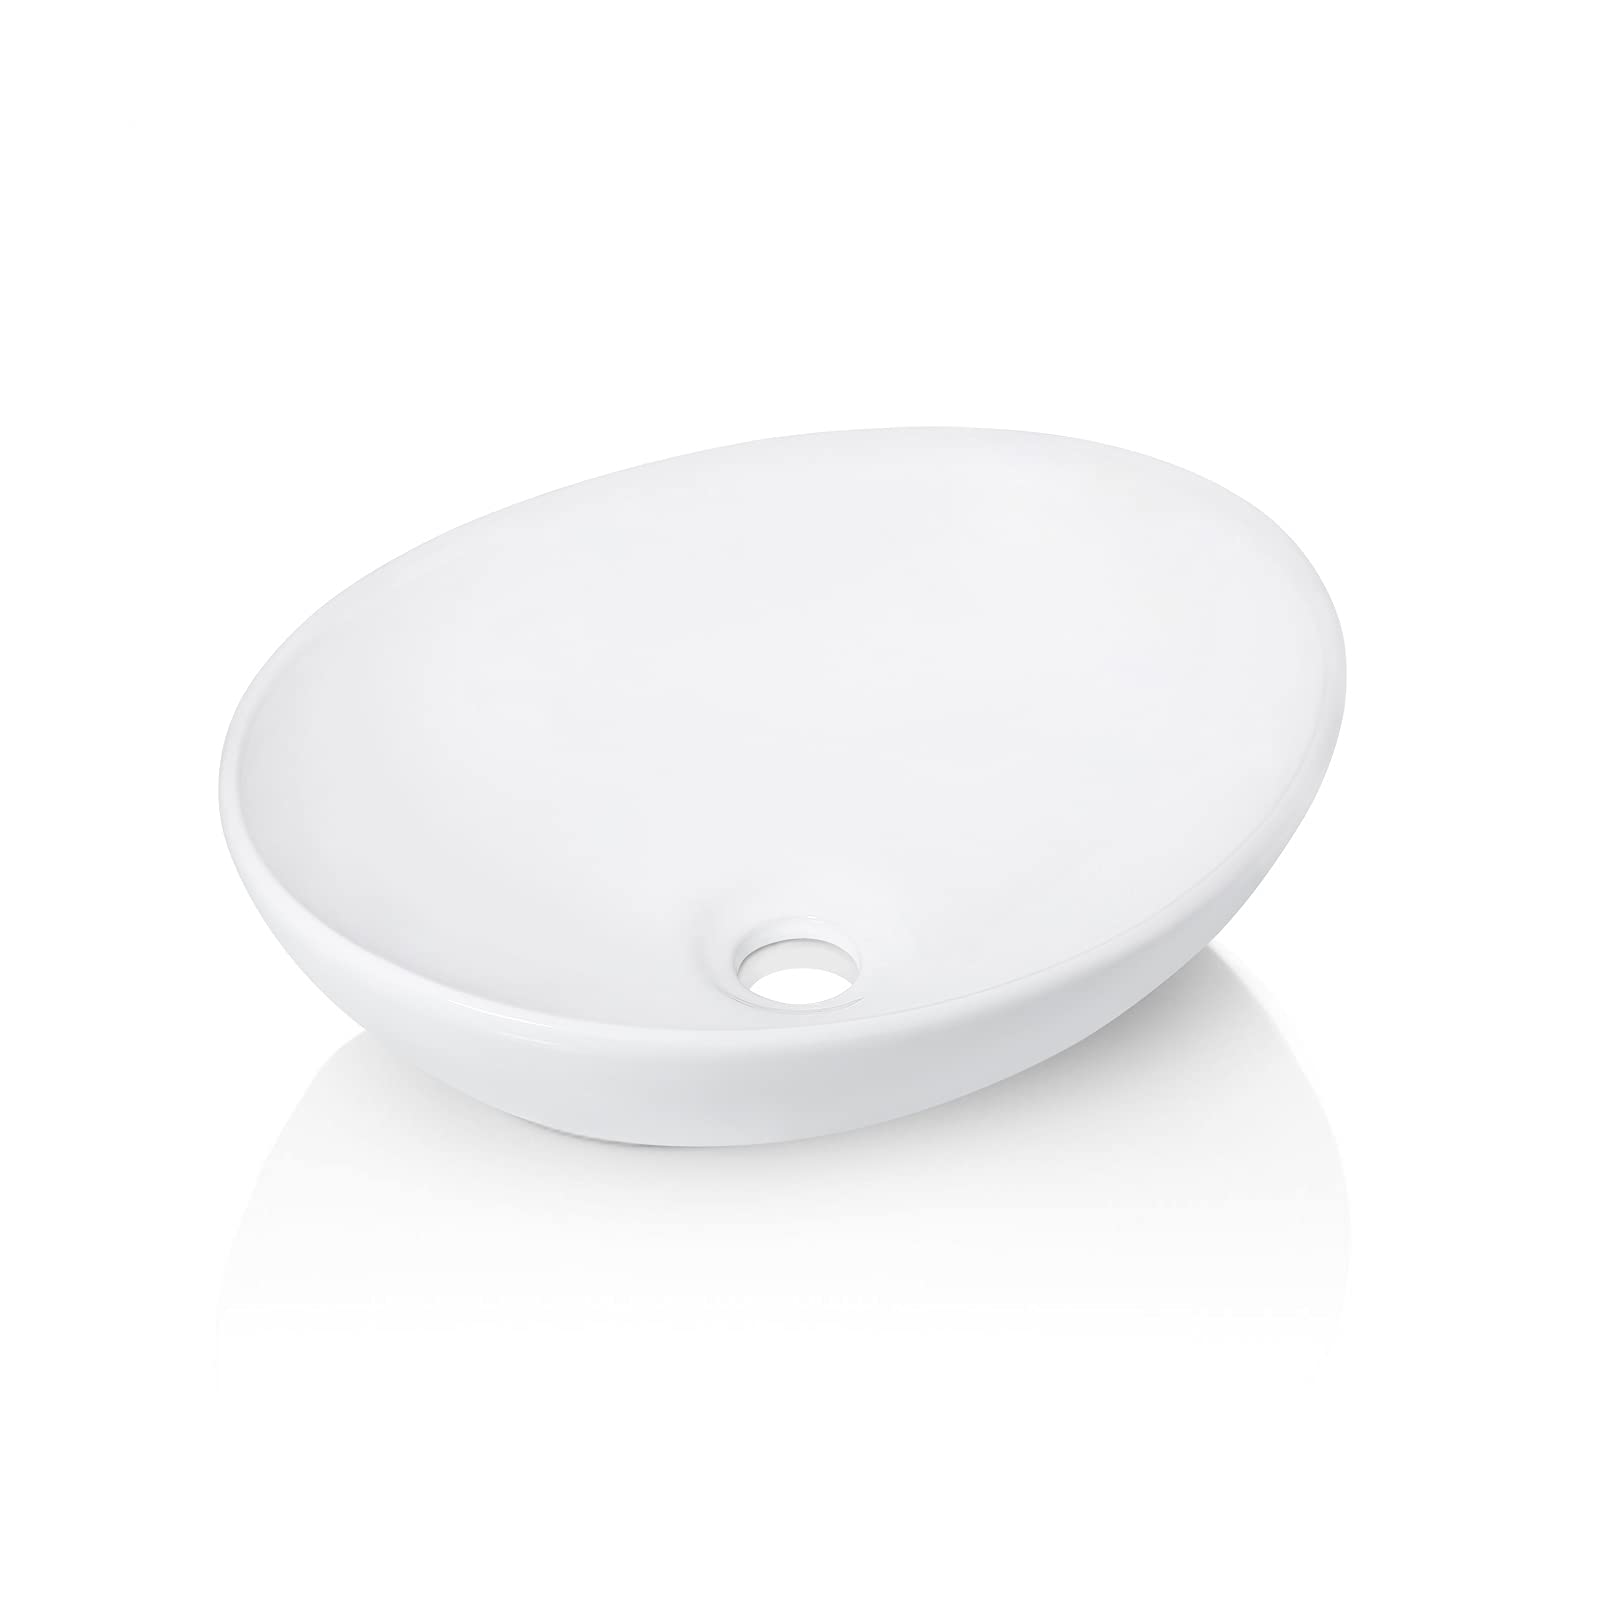 KES 16" x 13" Oval White Ceramic Vessel Sink - Modern Egg Shape Above Counter Bathroom Vanity Bowl, BVS124